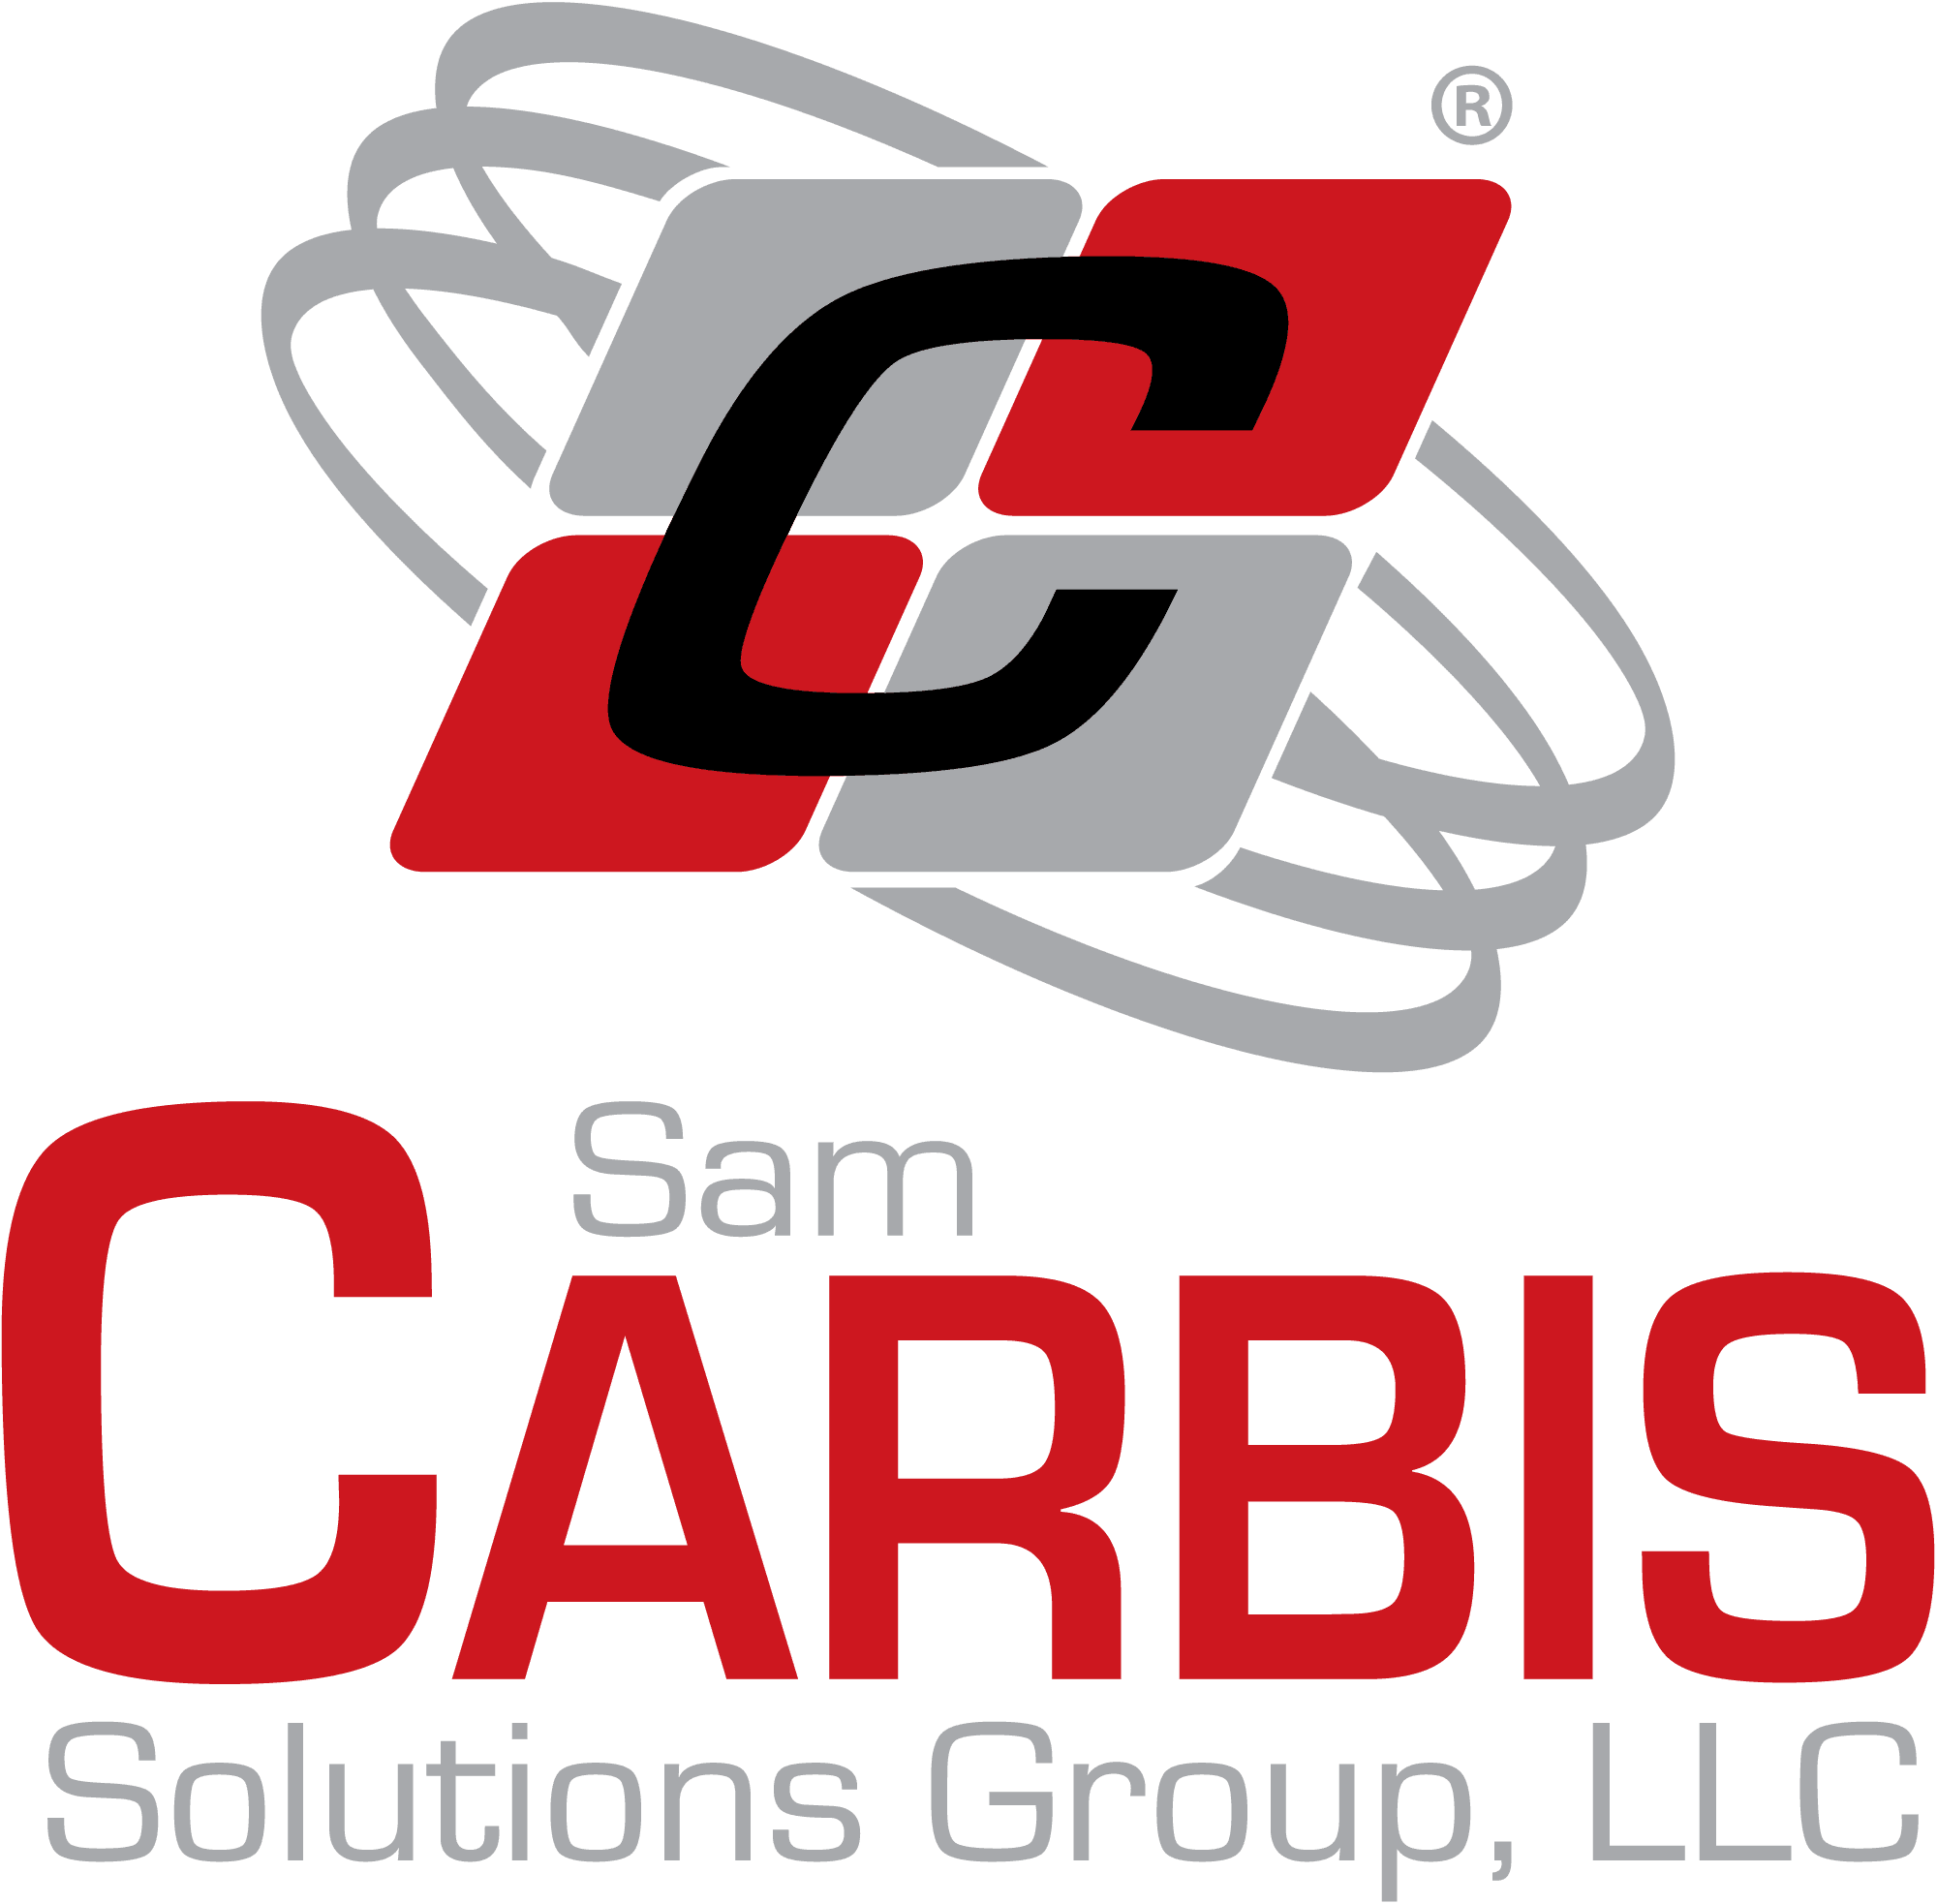 Sam Carbis Solutions